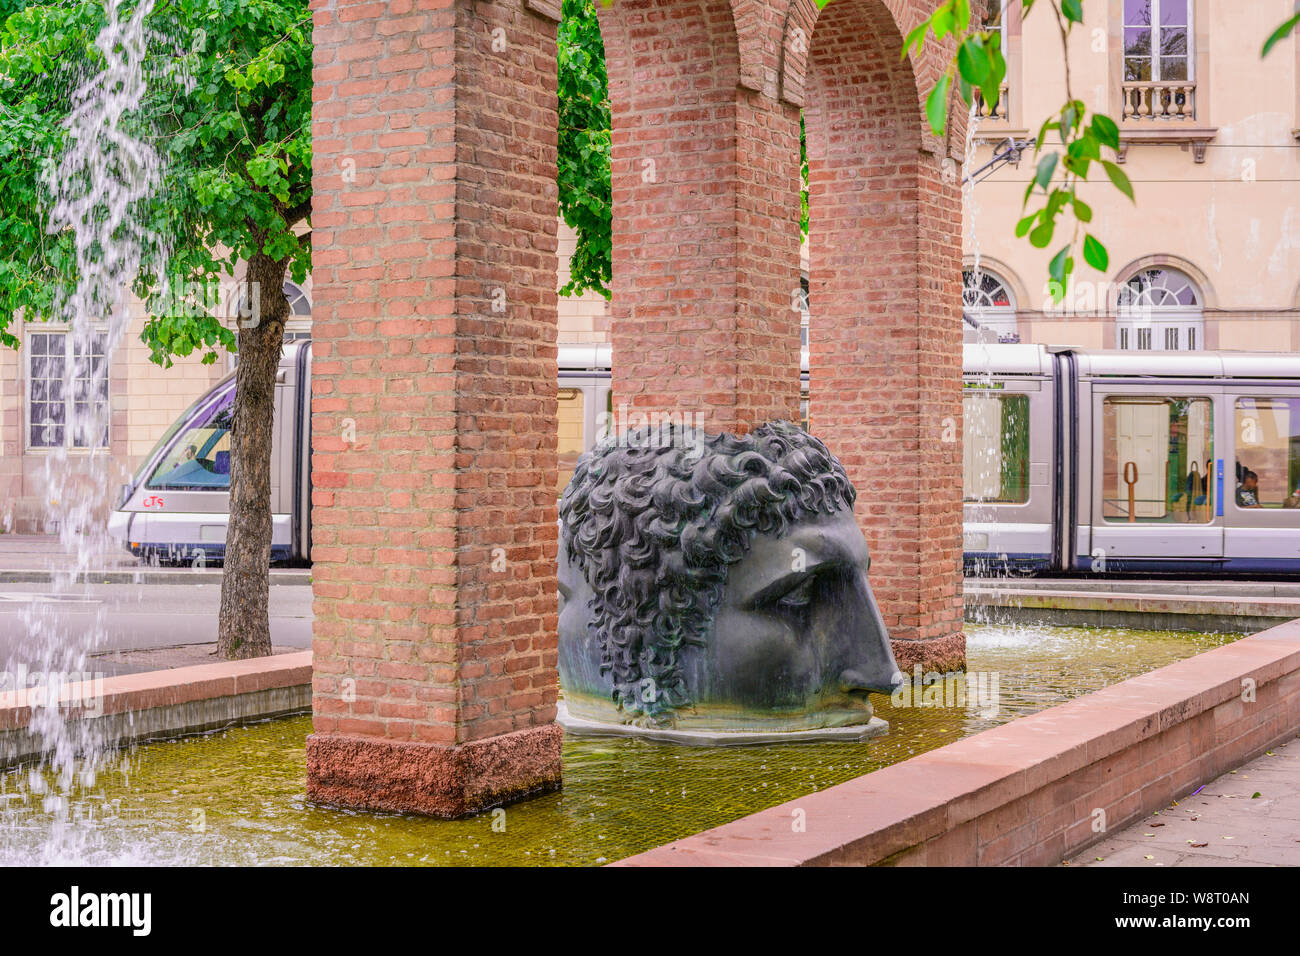 Janus's head sculpture, Birth of Civilization fountain, Roman aqueduct replica, designer Tomi Ungerer 1988, Strasbourg, Alsace, France, Europe, Stock Photo